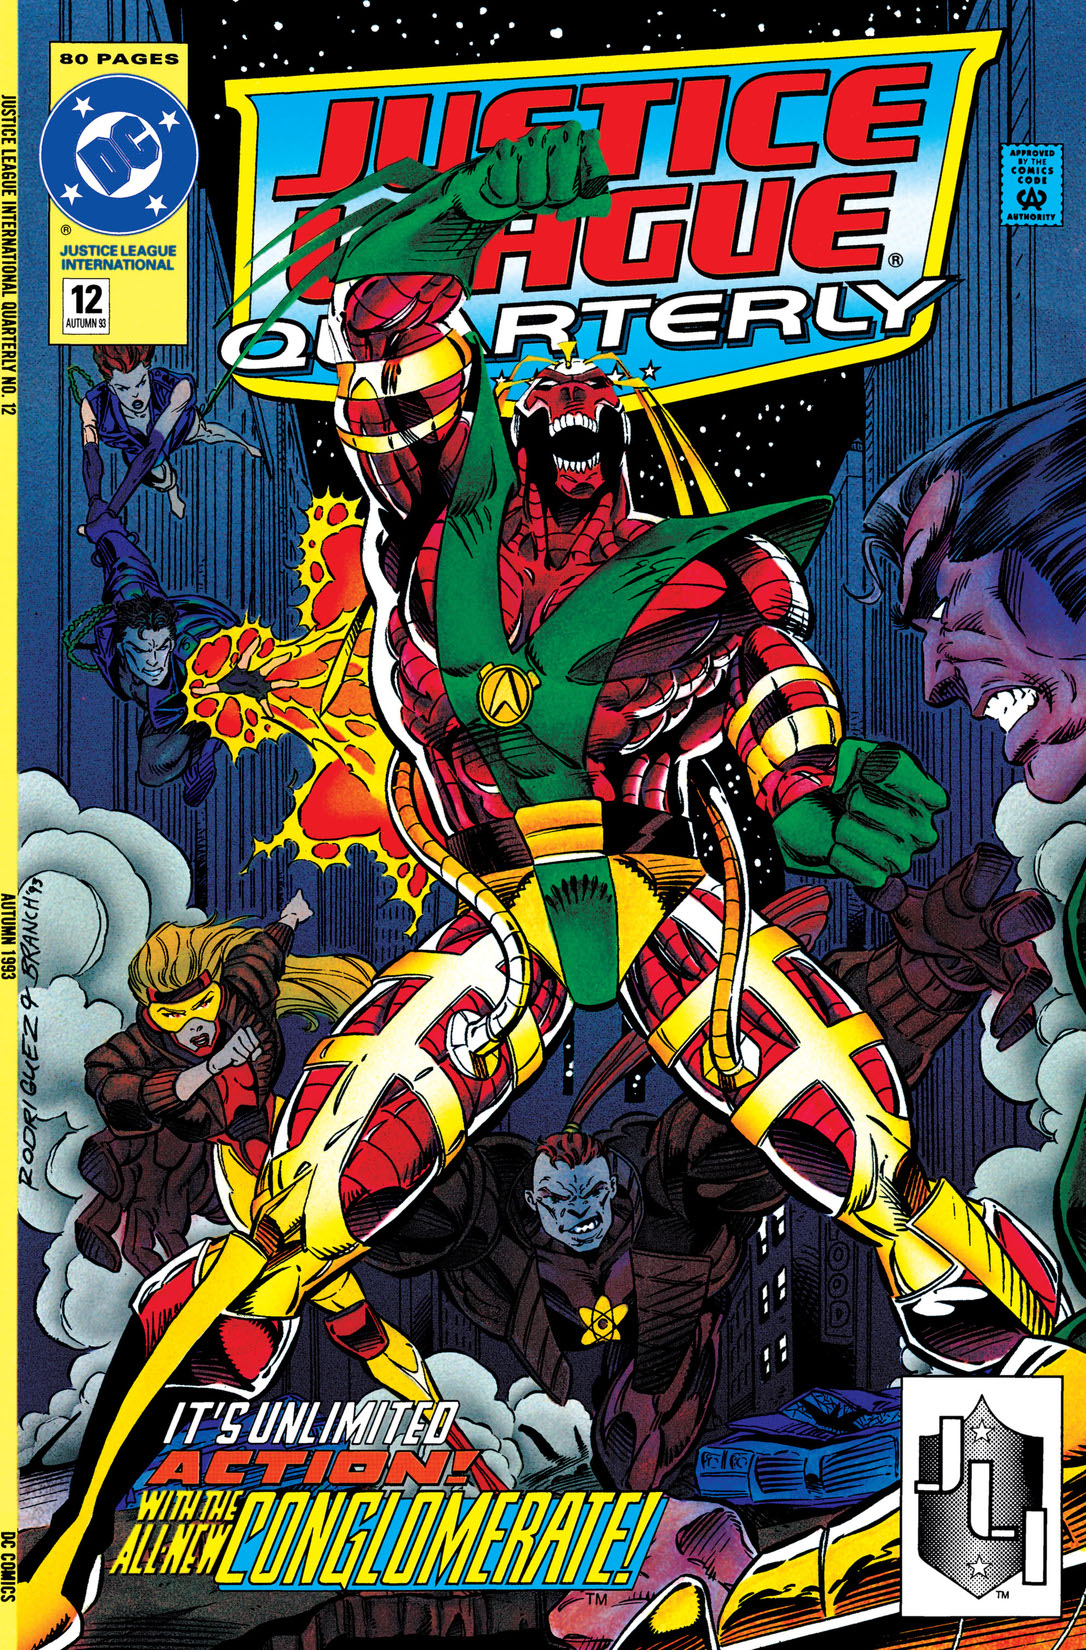 Justice League Quarterly #12 preview images